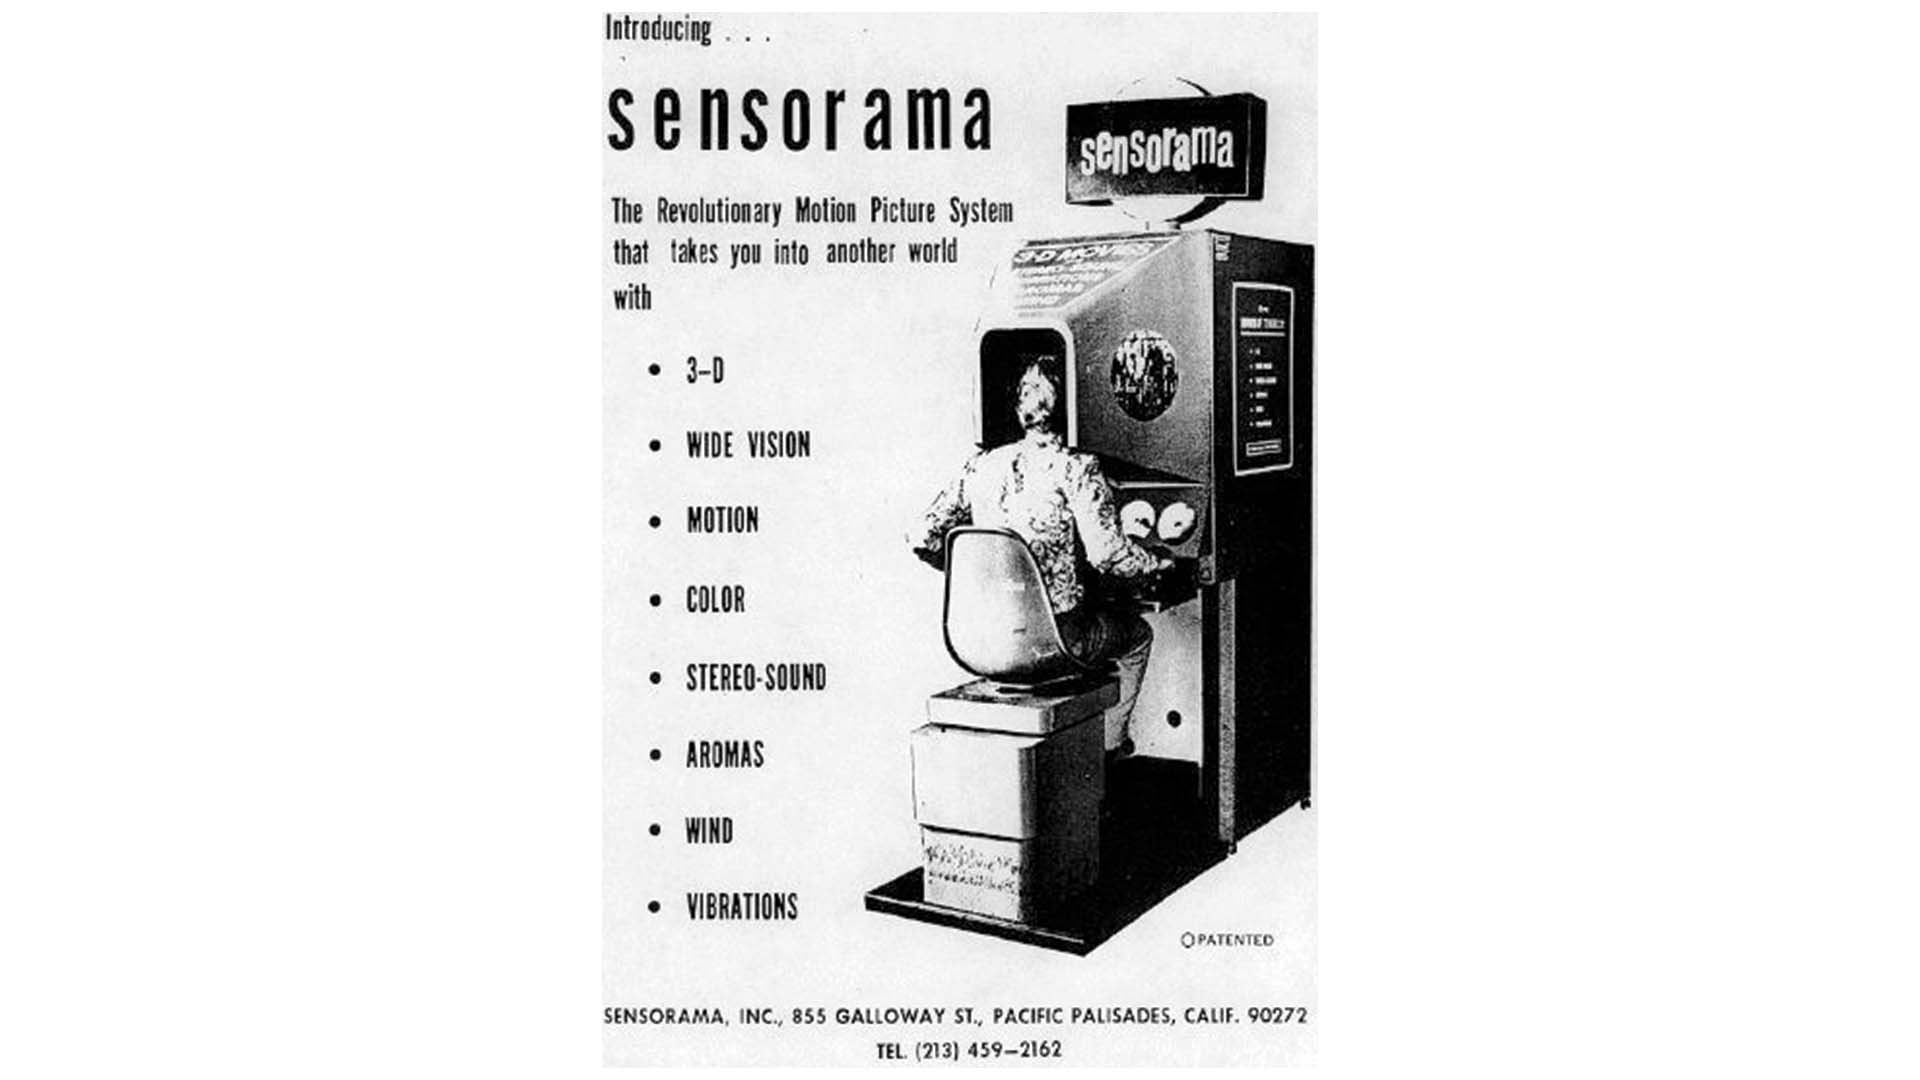 Sensorama Ad; Photo Credit: Research Gate